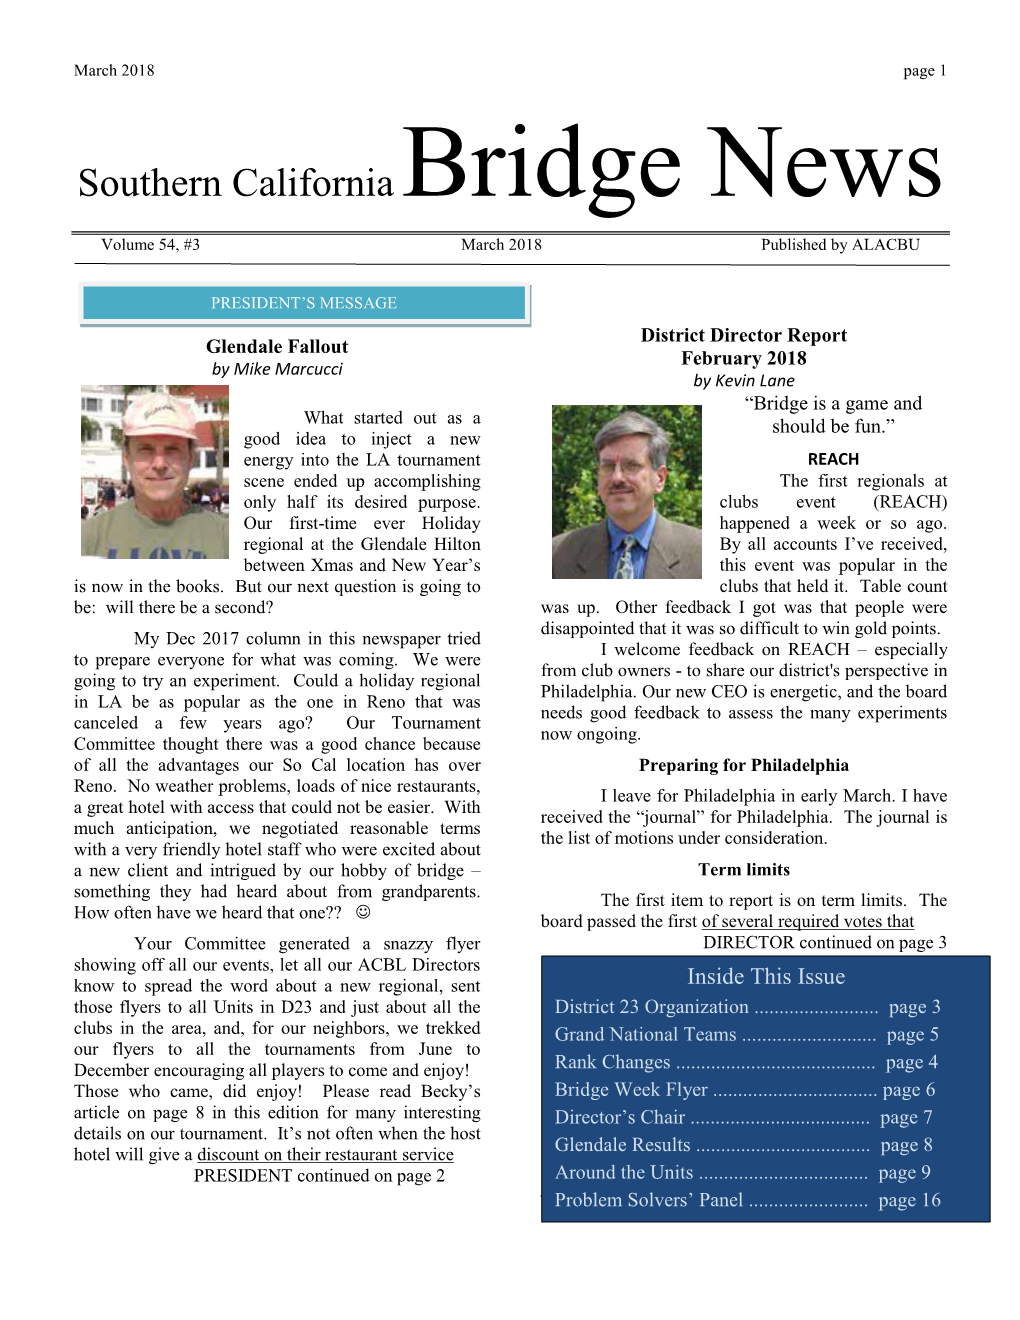 Southern California Bridge News